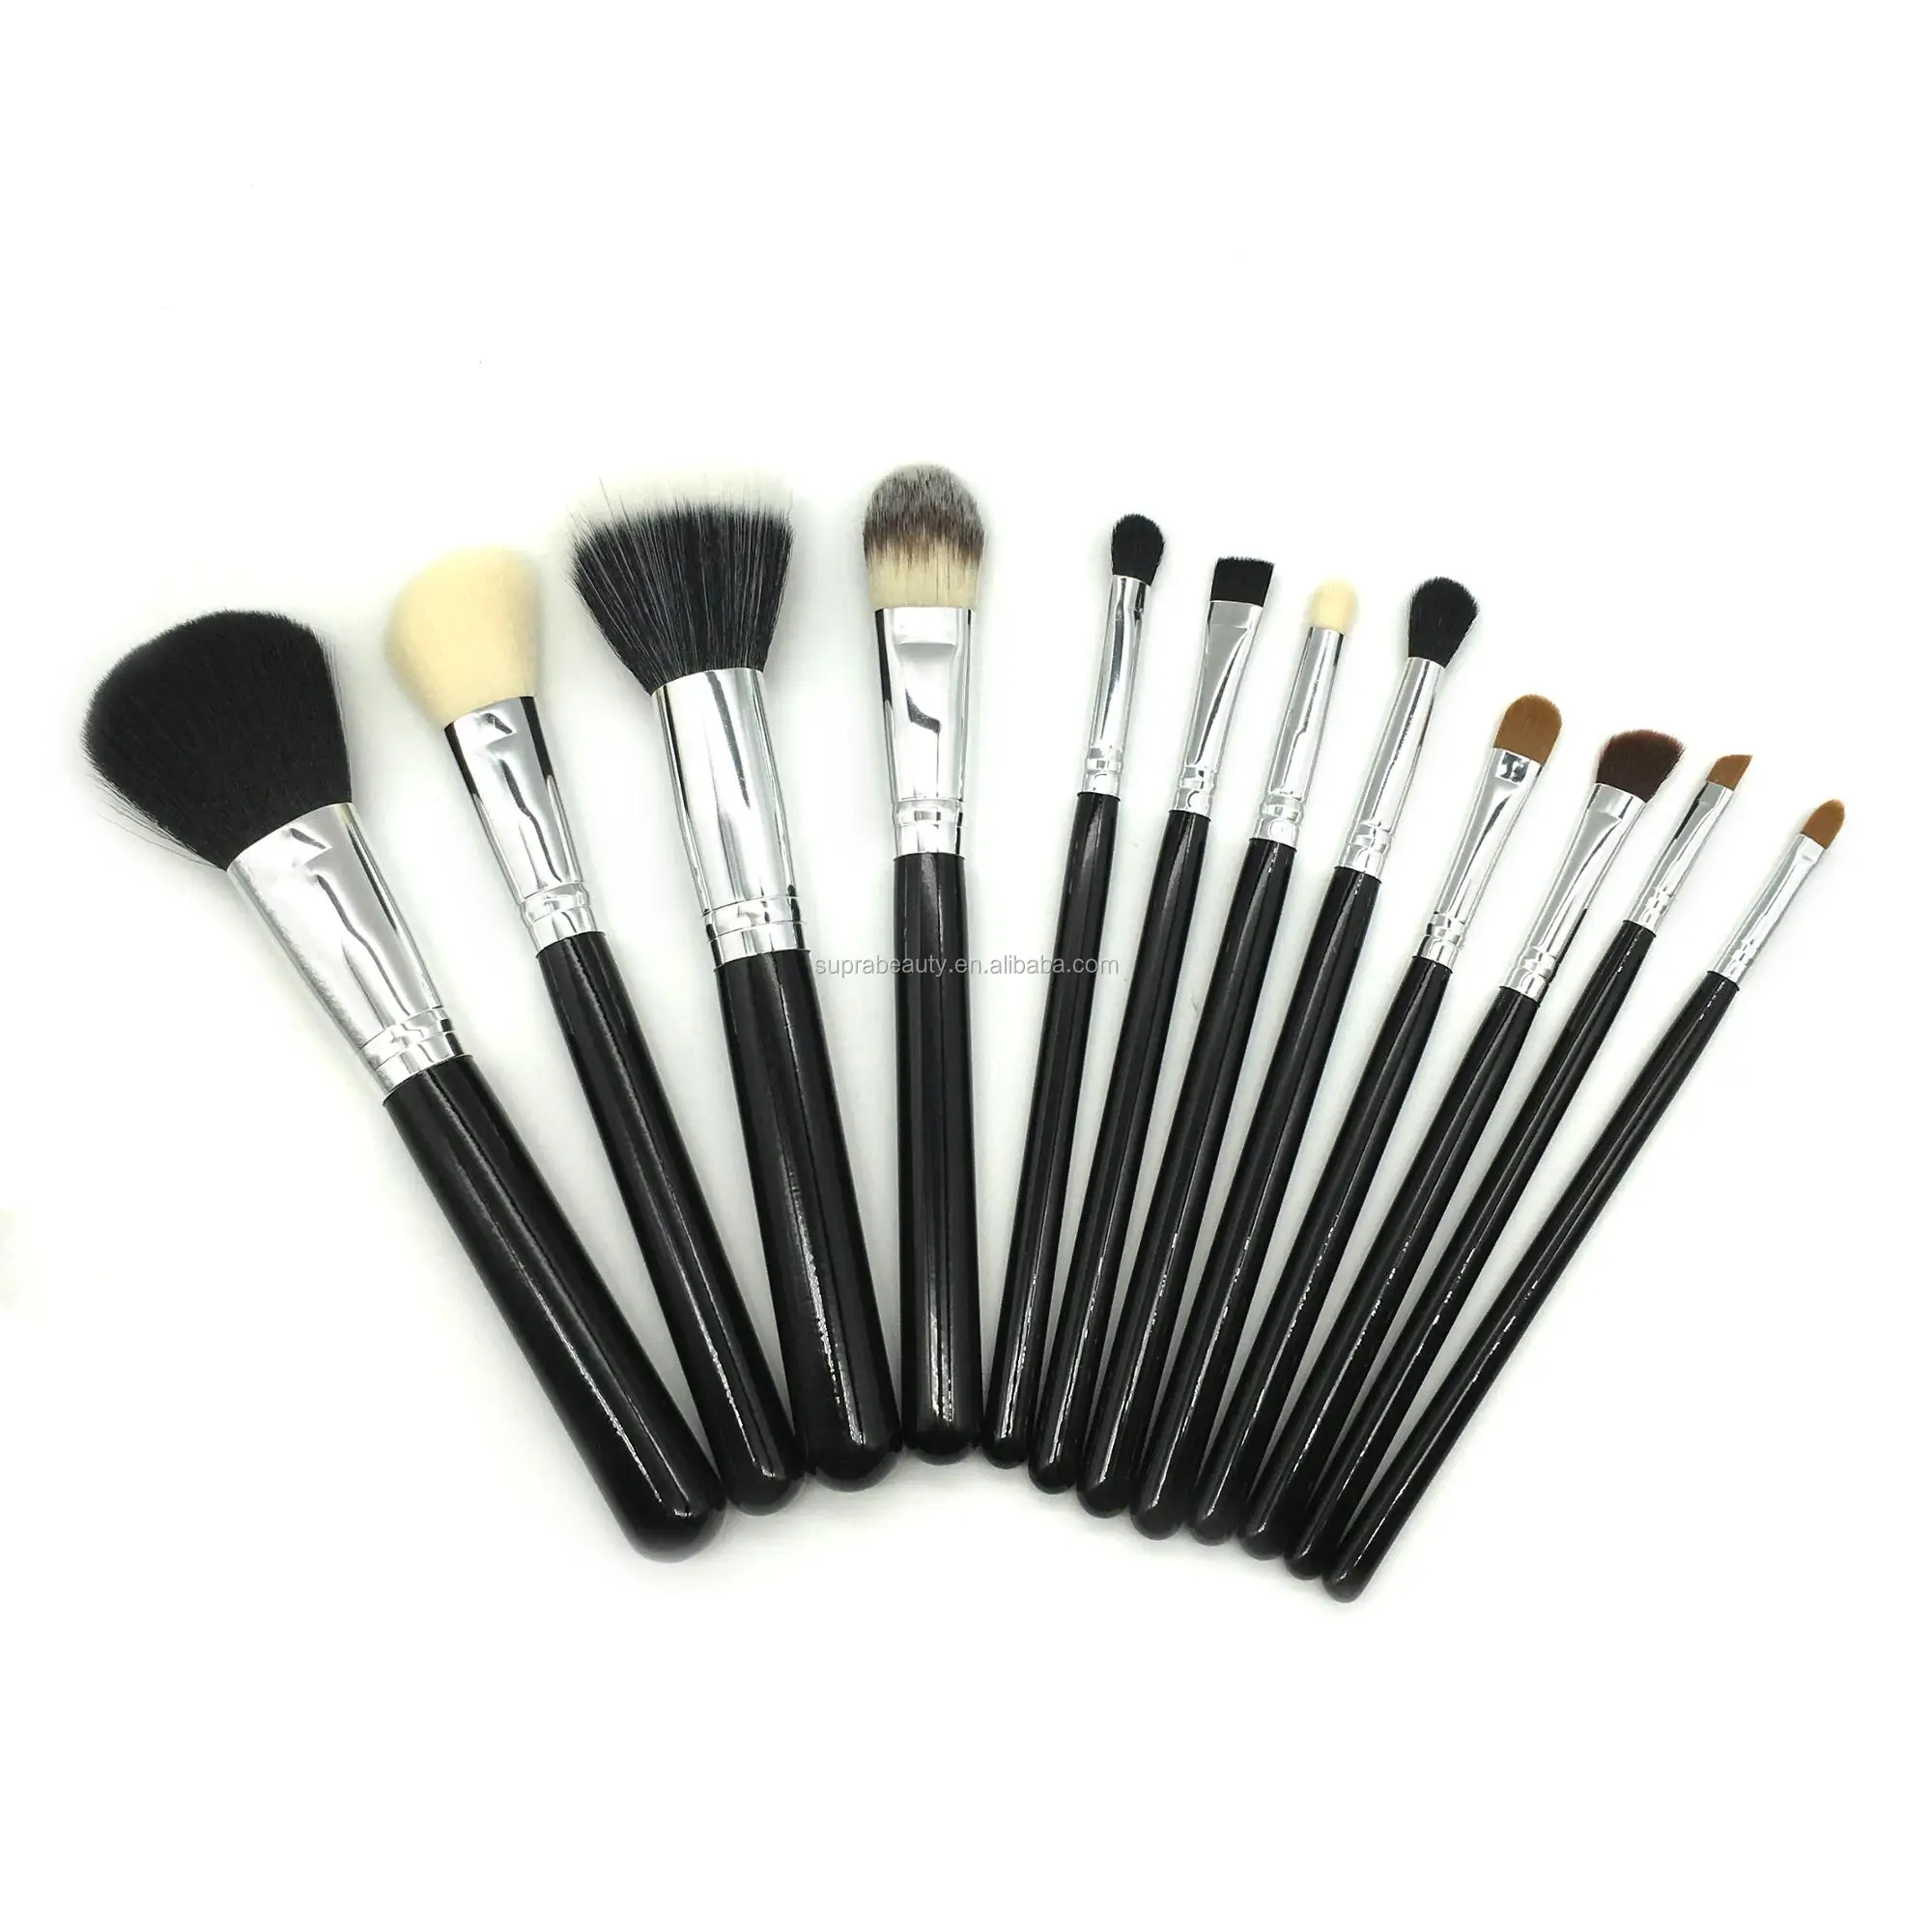 Packaging Synthetic Sable Applicator Make Up Set 16 pcs Handmade Makeup Brush